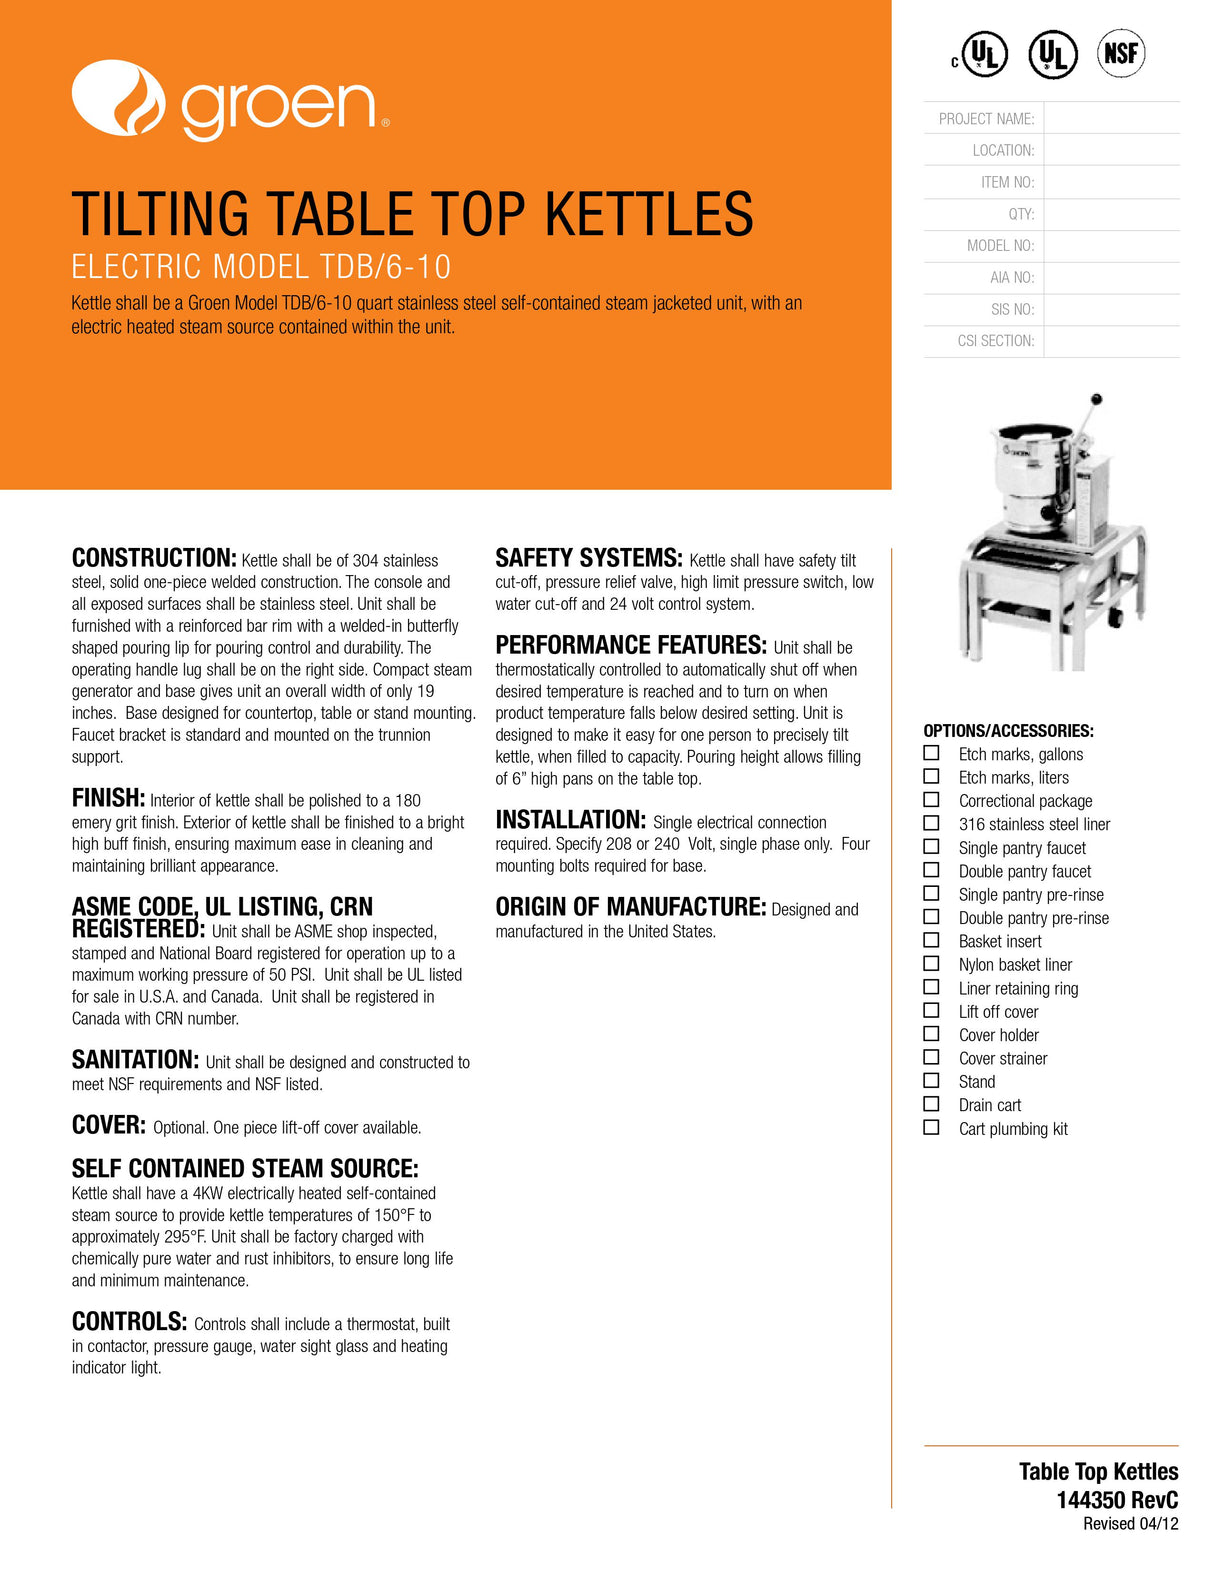 tilting table top kettle spec sheet